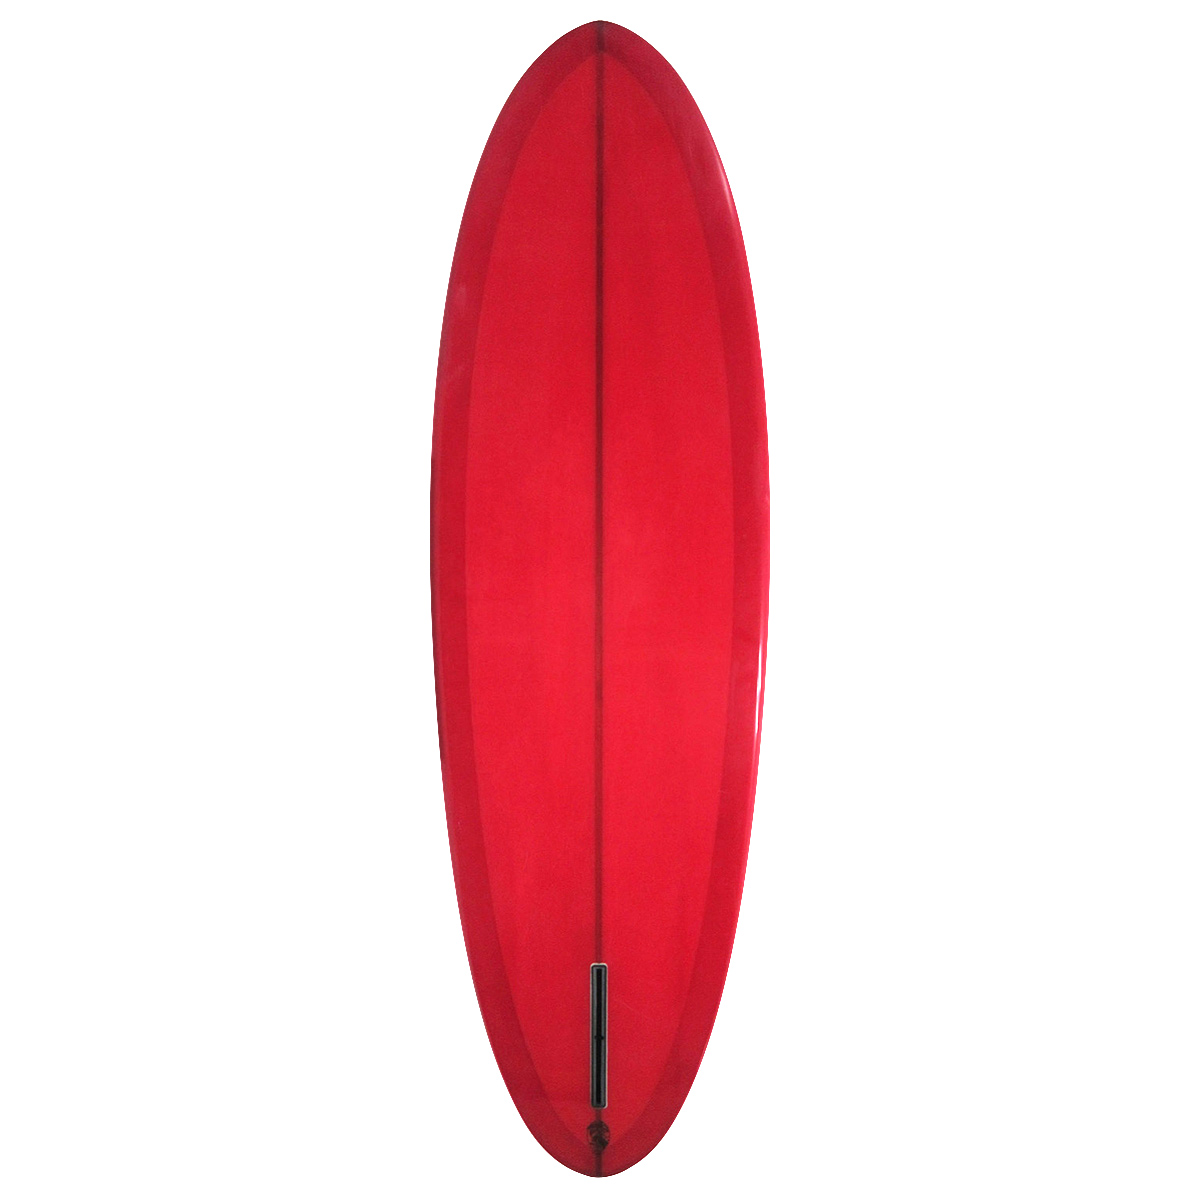 EC Surfboards  / 6'5 Cosmic Rider